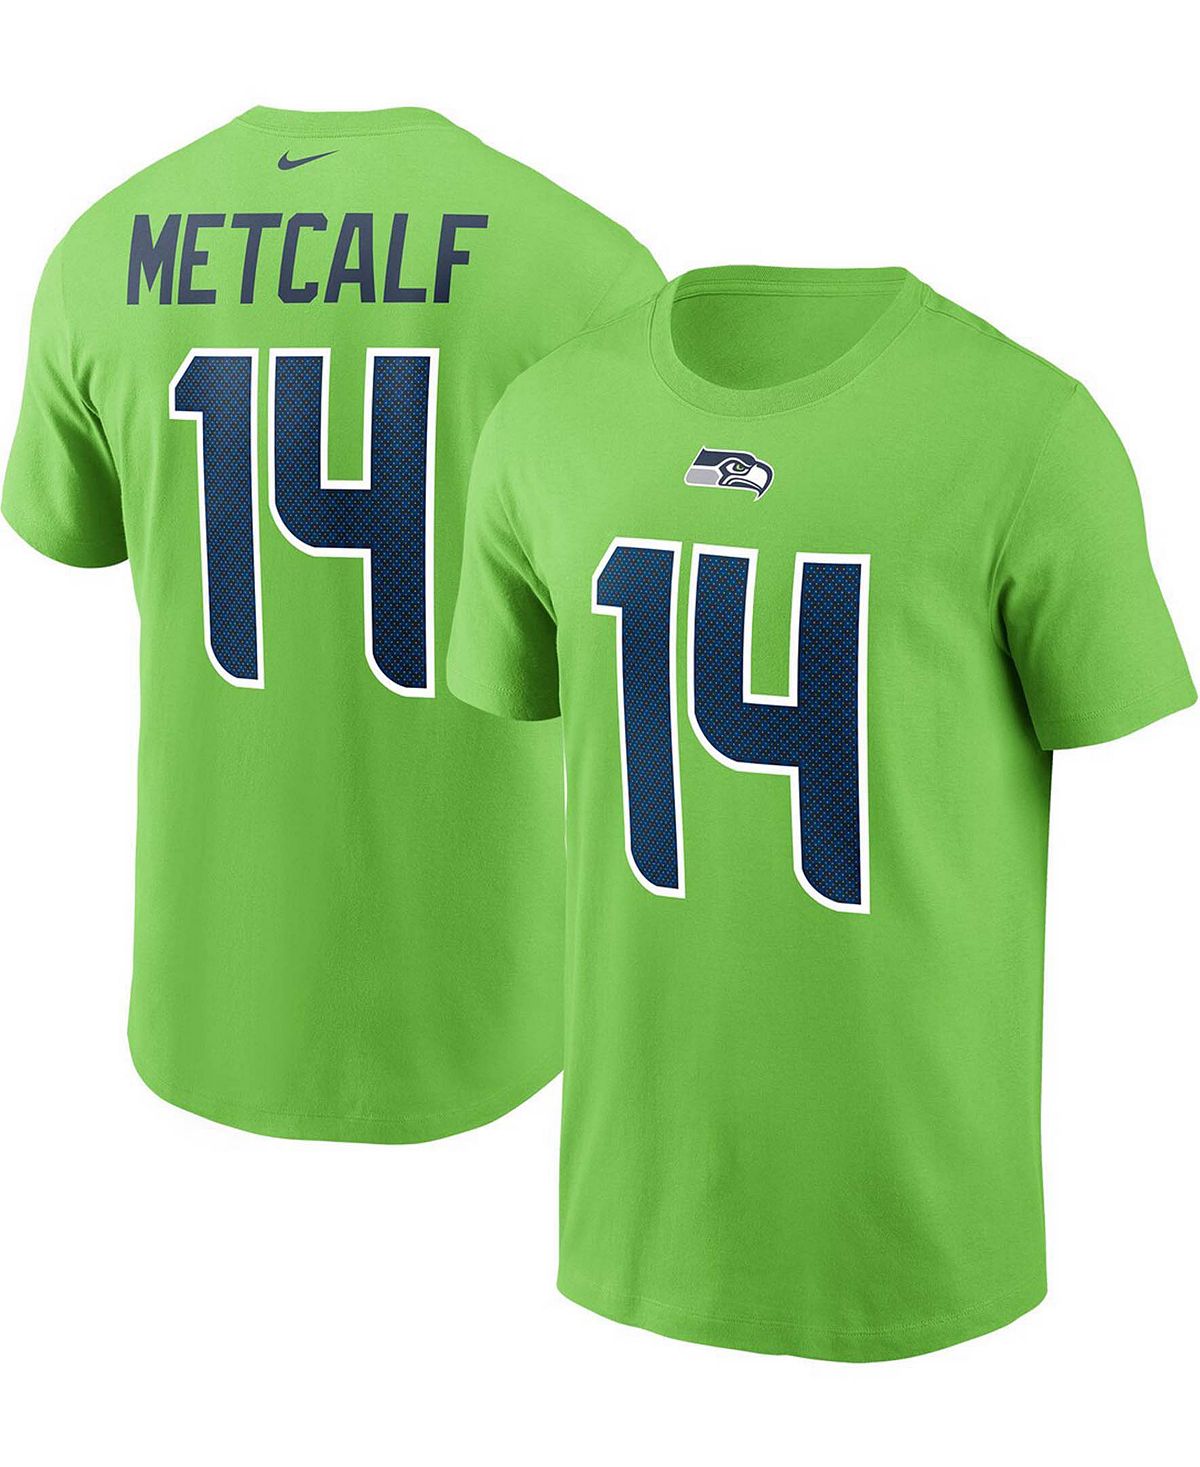 Мужская футболка DK Metcalf Neon Green Seattle Seahawks с именем и номером Nike мужская футболка с капюшоном dk metcalf college navy seattle seahawks с именем и номером tri blend fanatics синий